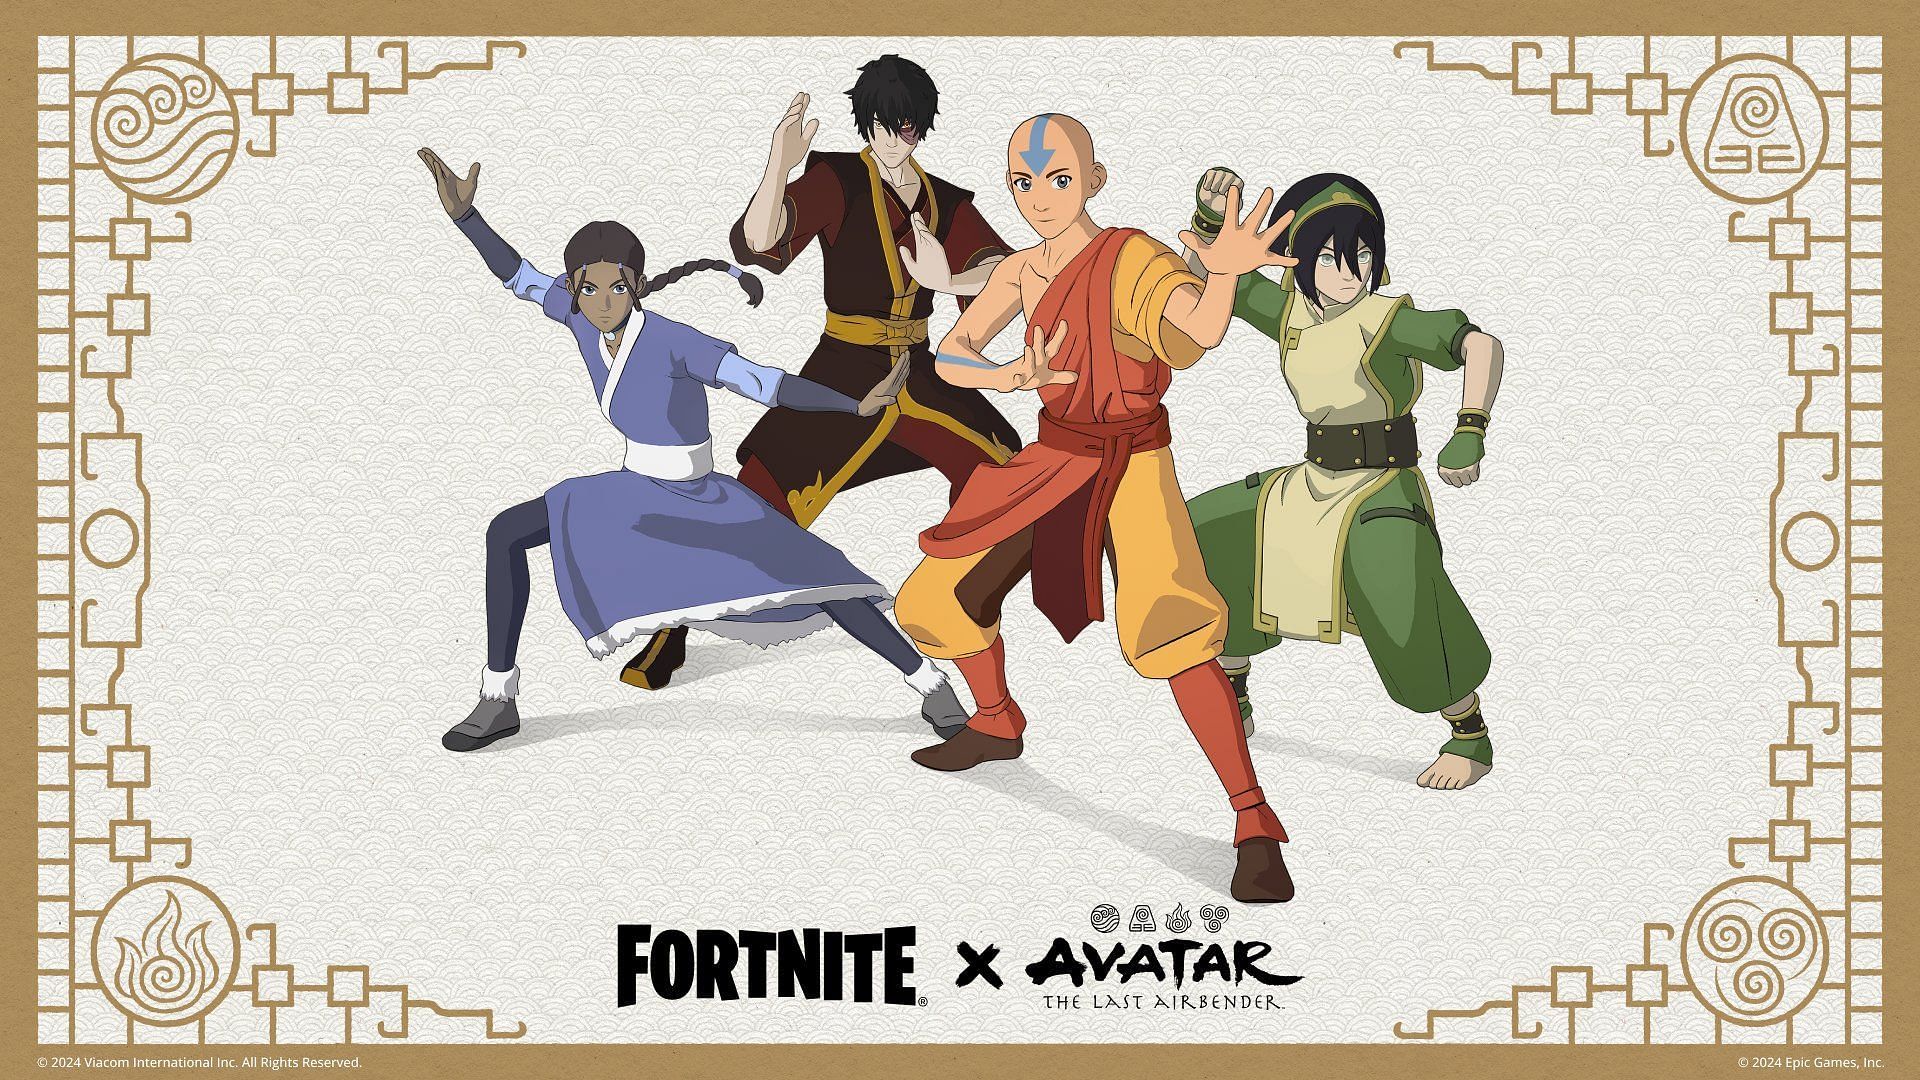 Fortnite Avatar The Last Airbender Elements gameplay trailer breakdown